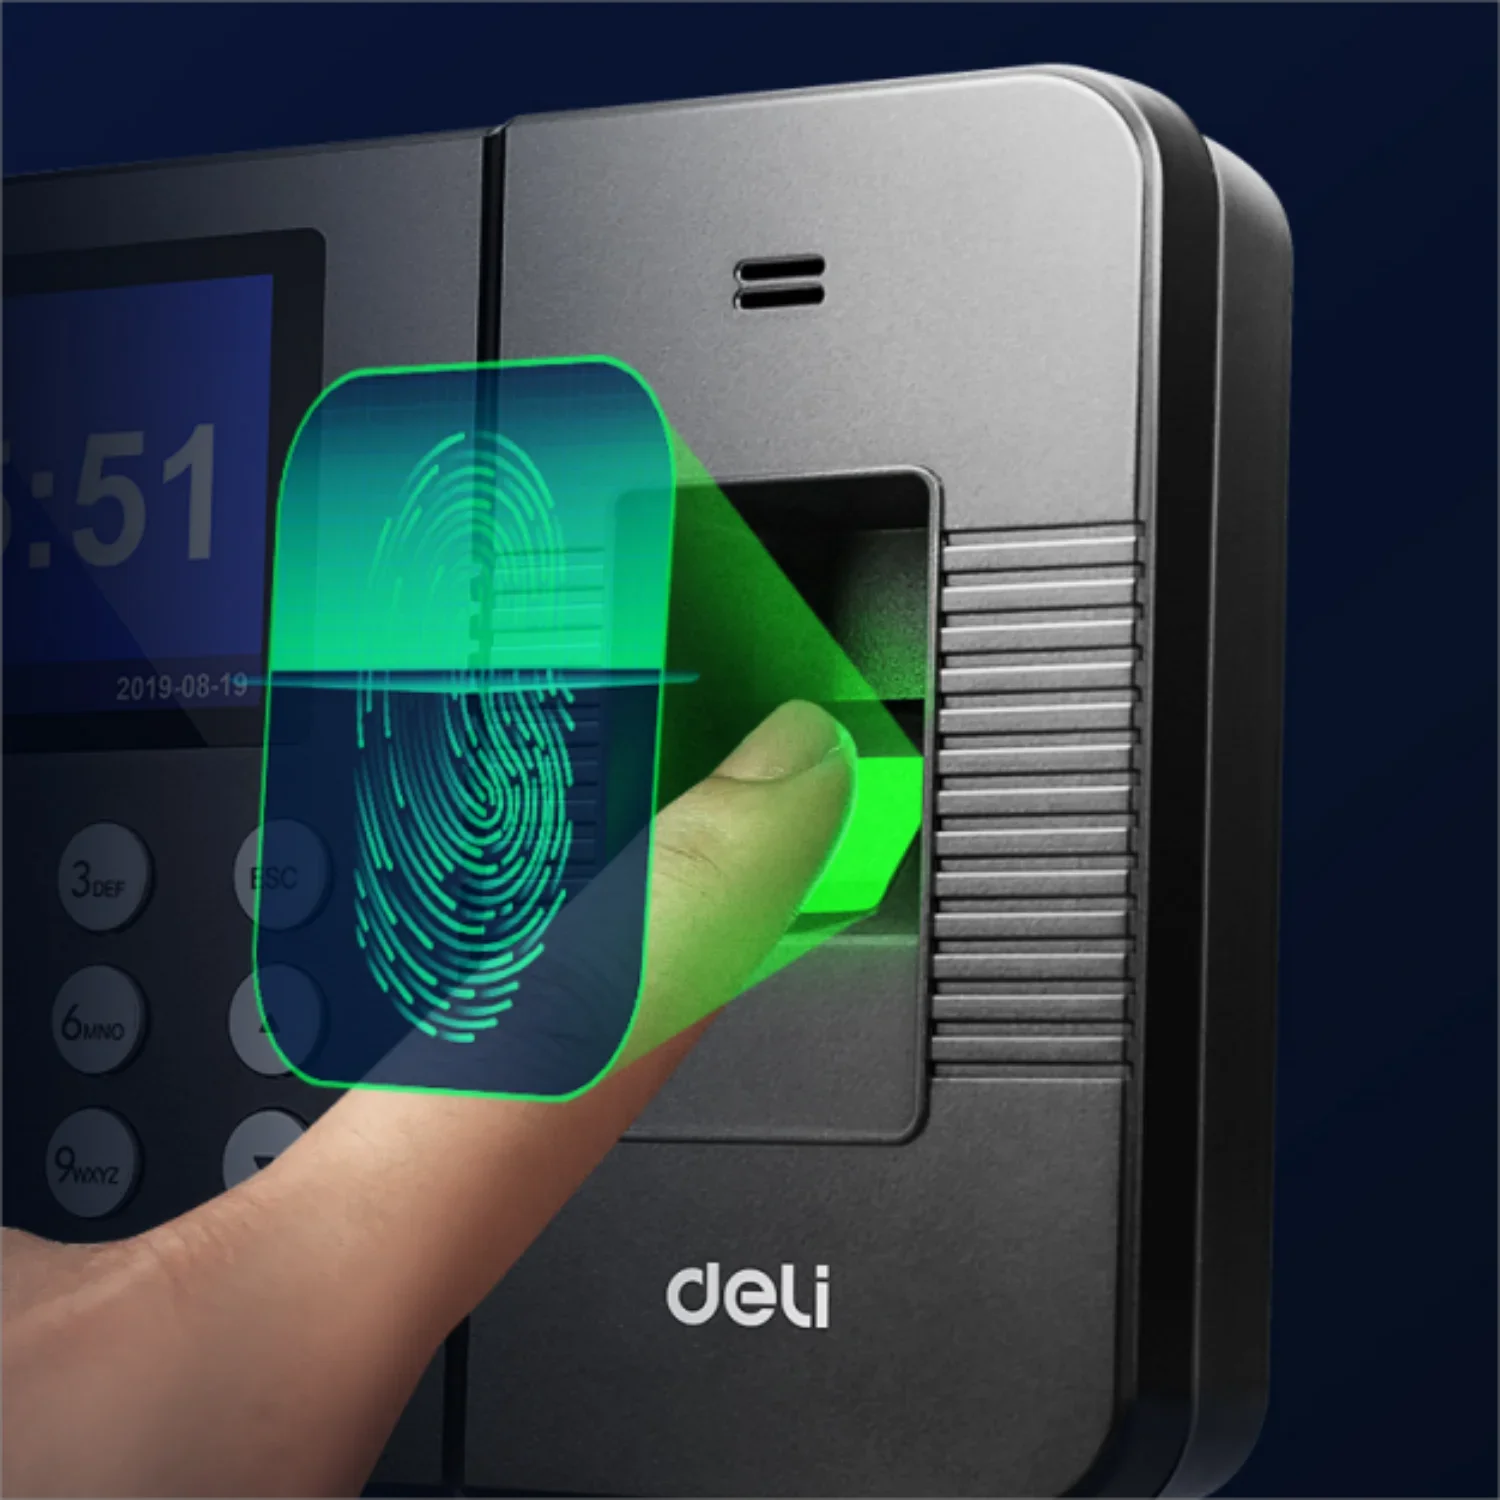 Deli Fingerprint Time Attendance System Biometric Clock Recorder Employee Recorder Management Device Electronic Machine E3960